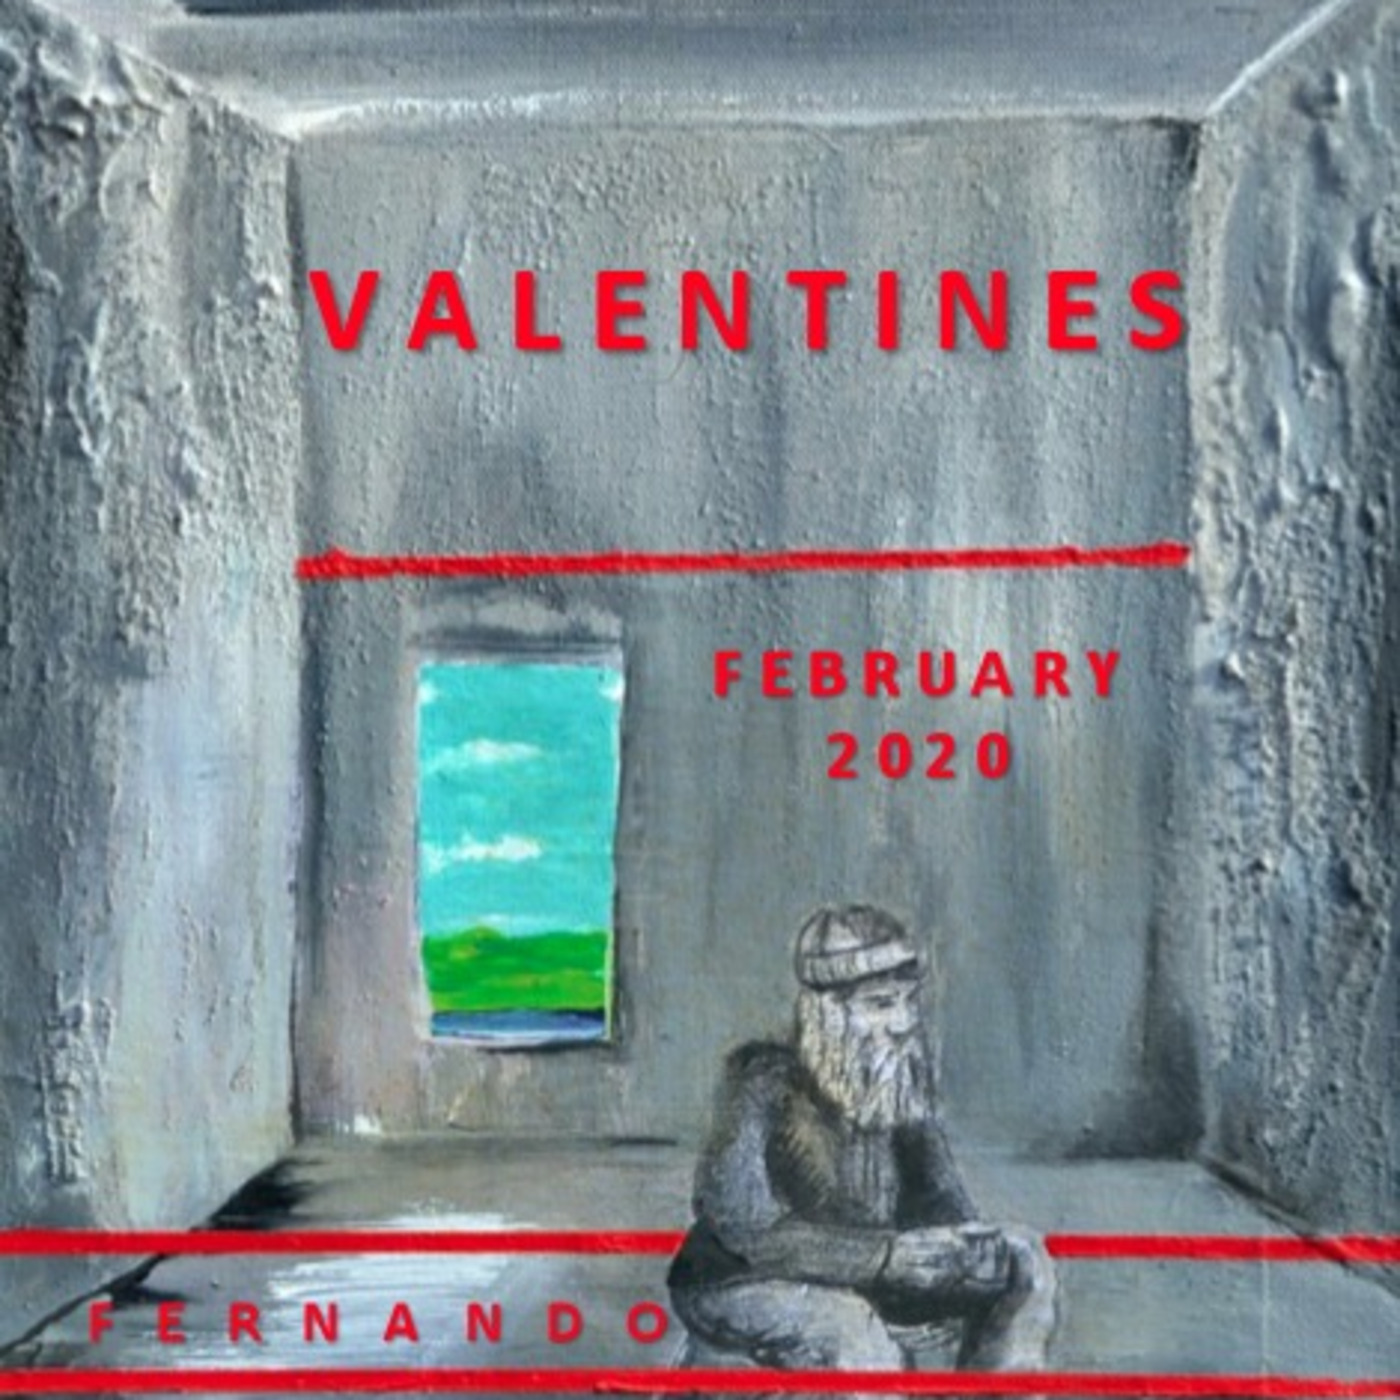 Fernando - Valentines 2020